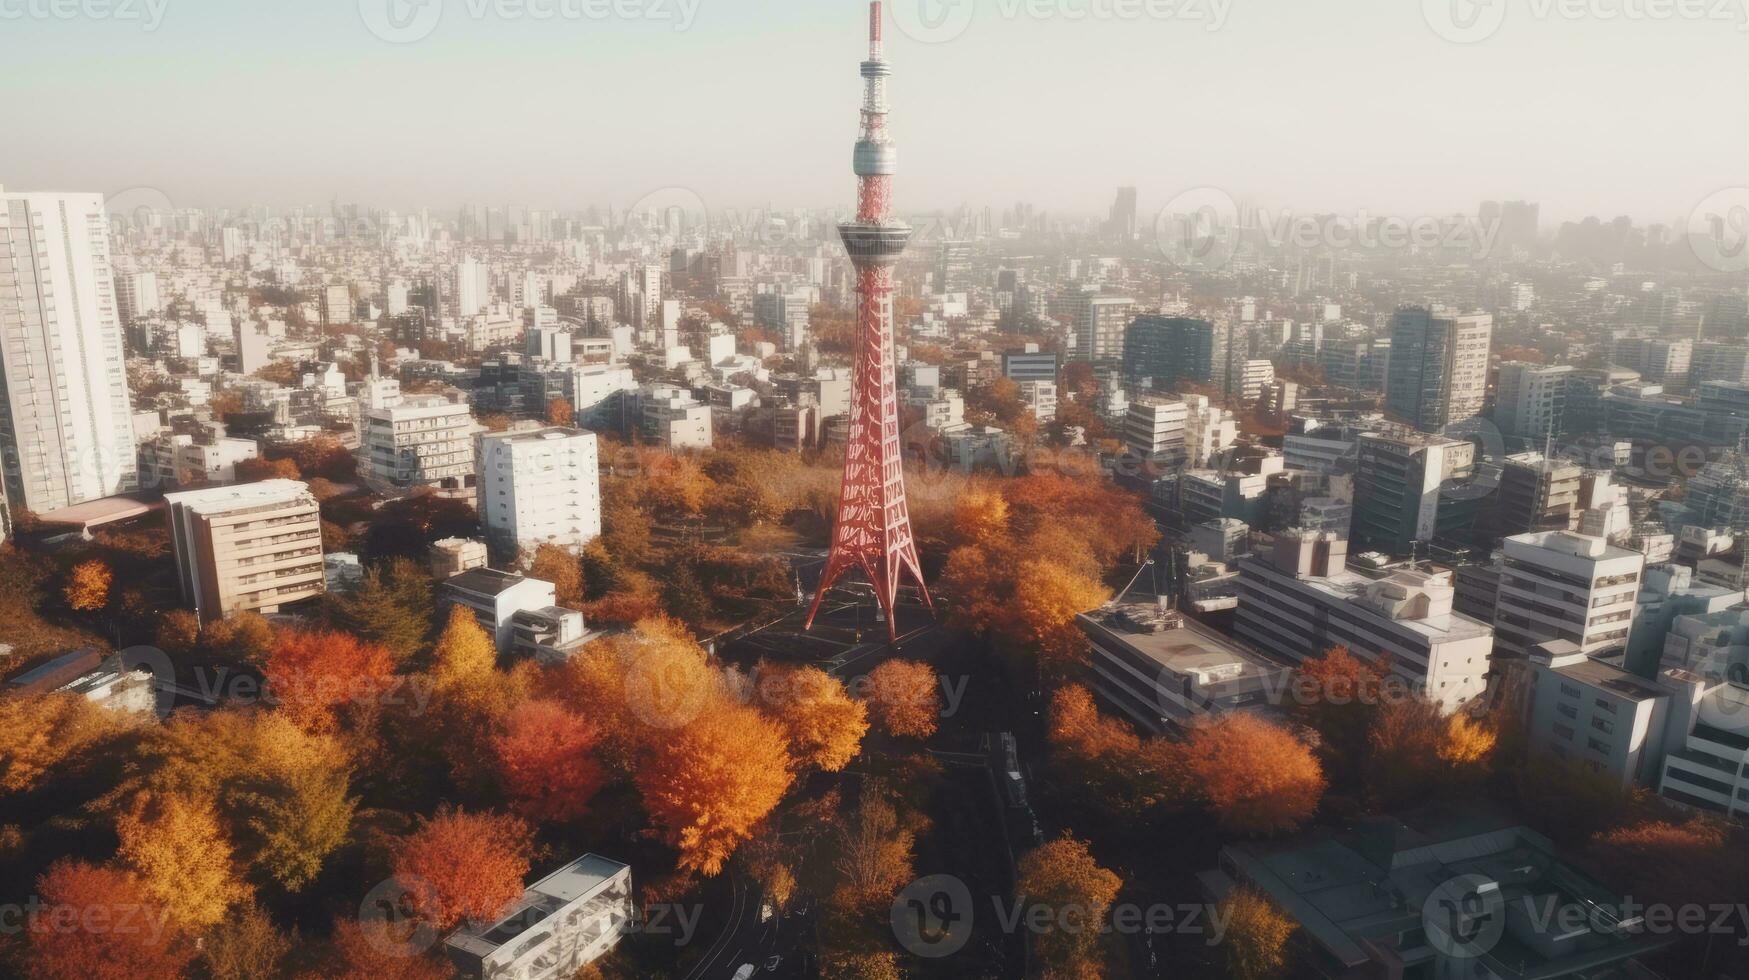 Japón zen tokio televisión torre paisaje panorama ver fotografía sakura flores pagoda paz silencio foto